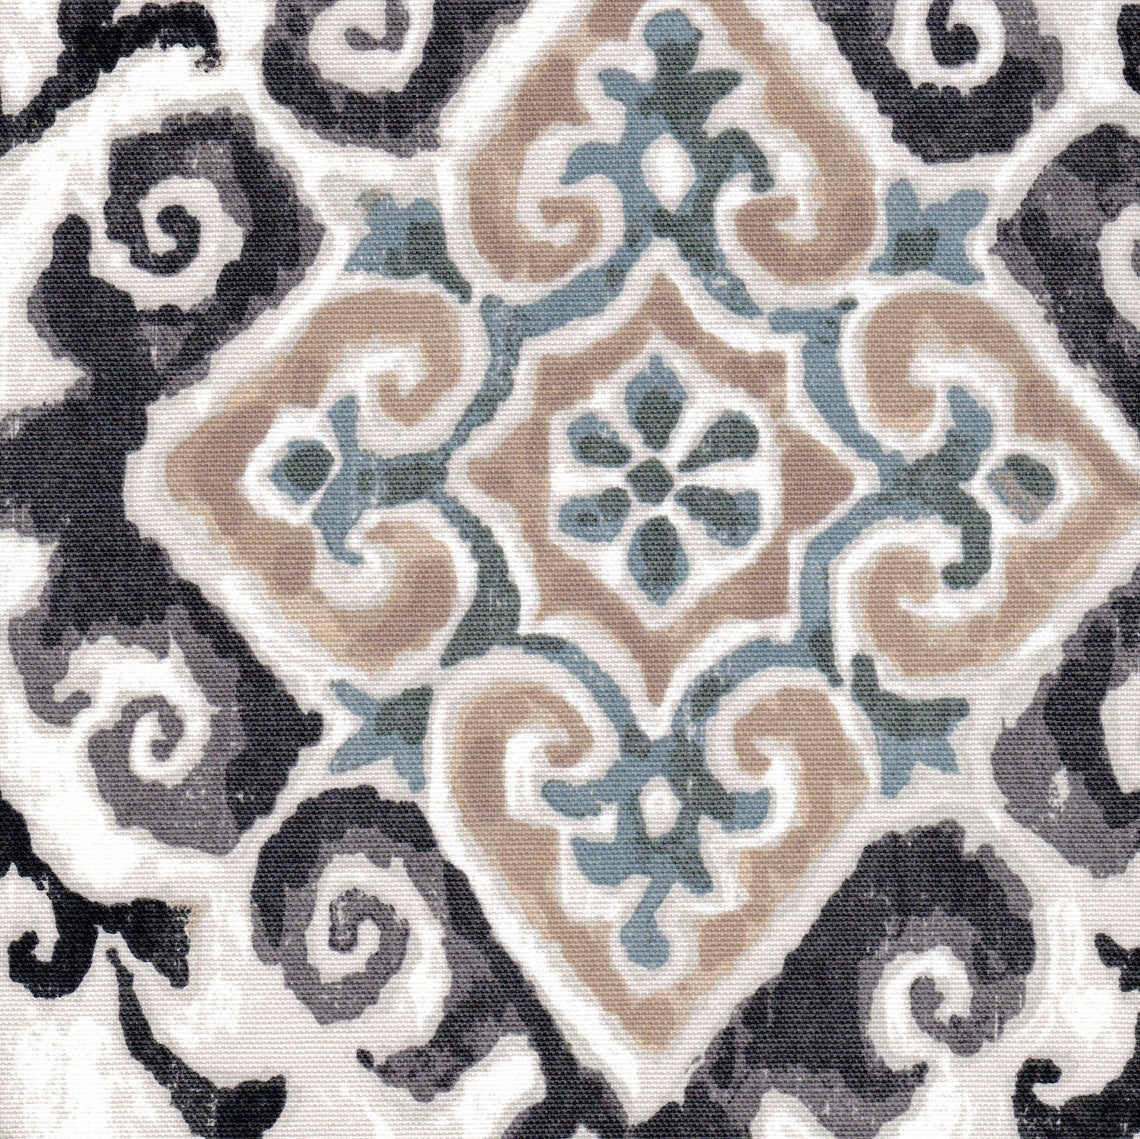 gathered bedskirt in feabhra slate gray diamond medallion- blue, tan, large scale